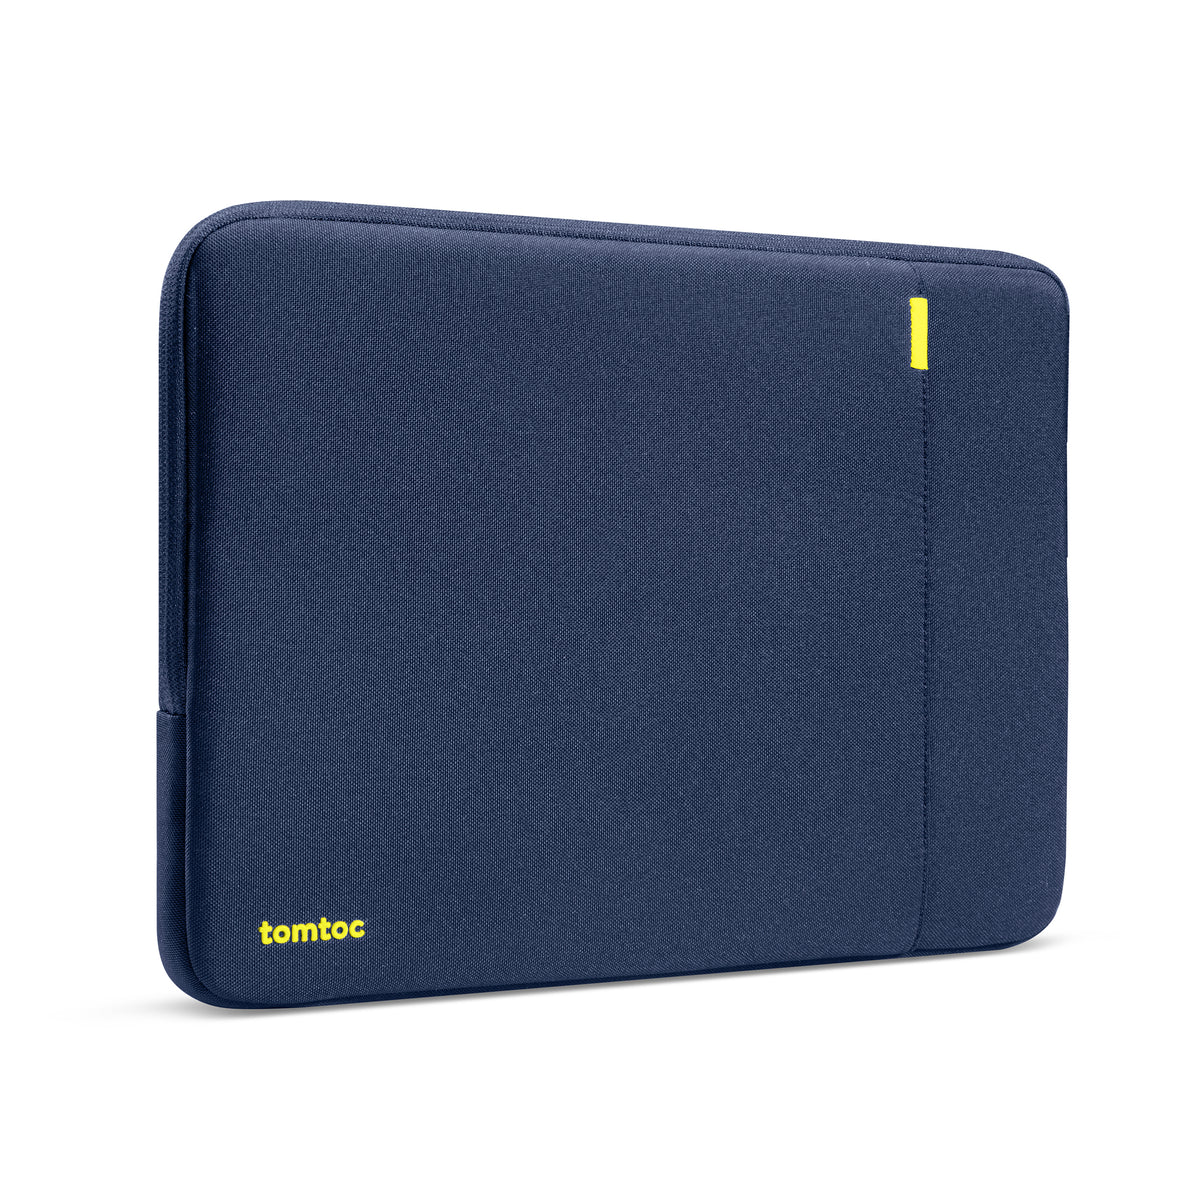 tomtoc 15 Inch Versatile 360 Protective Laptop Sleeve - Navy Blue